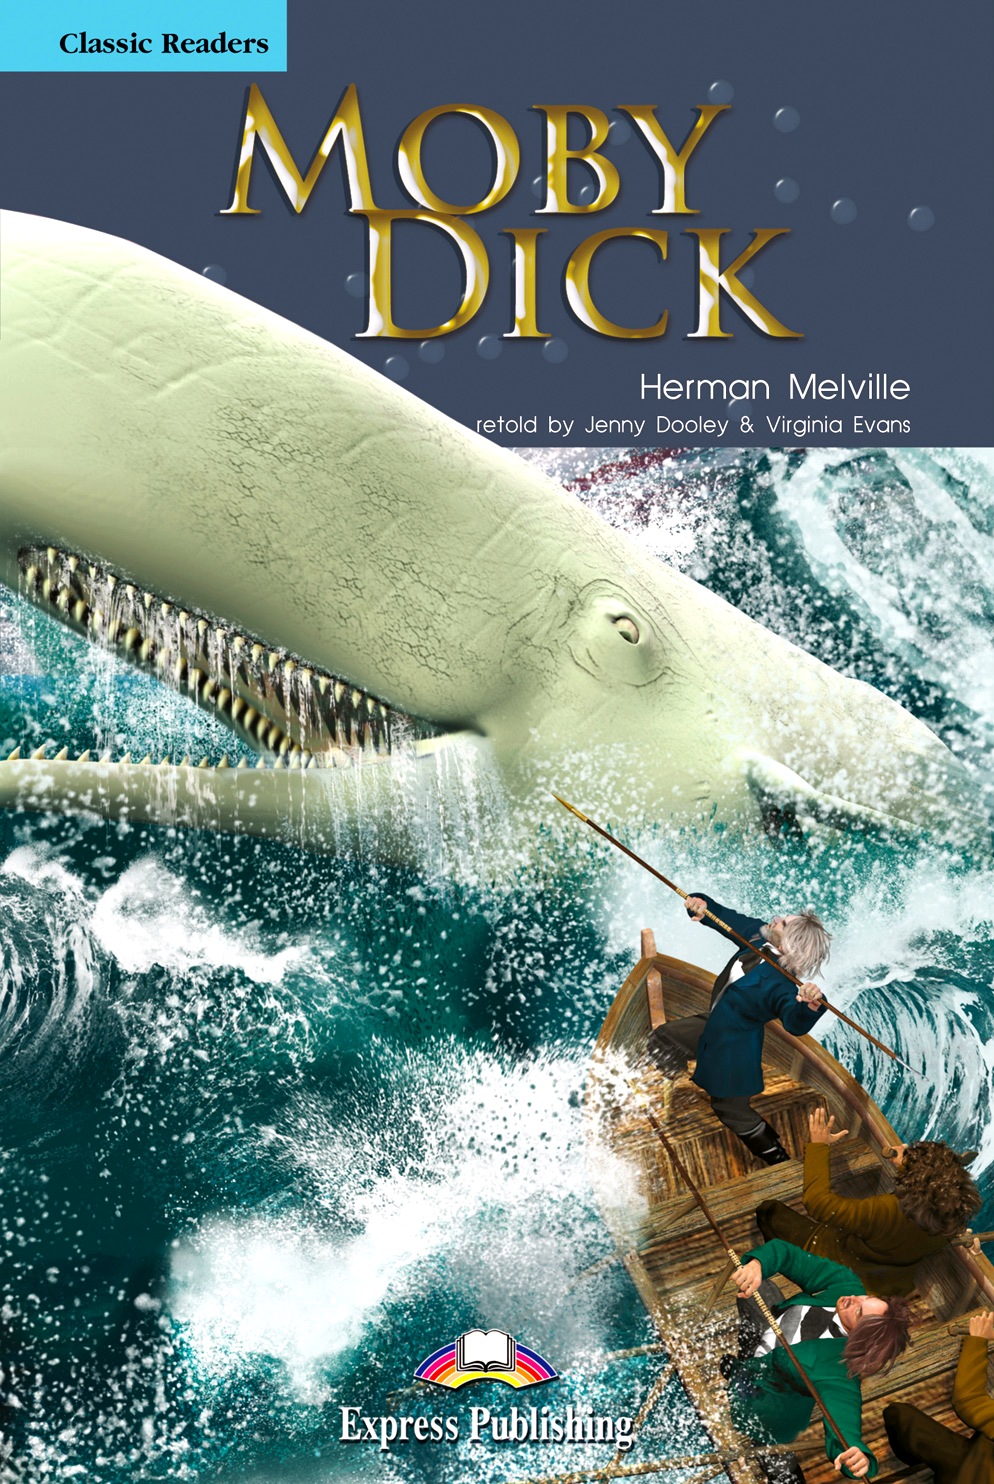 Сочинение по теме Moby Dick